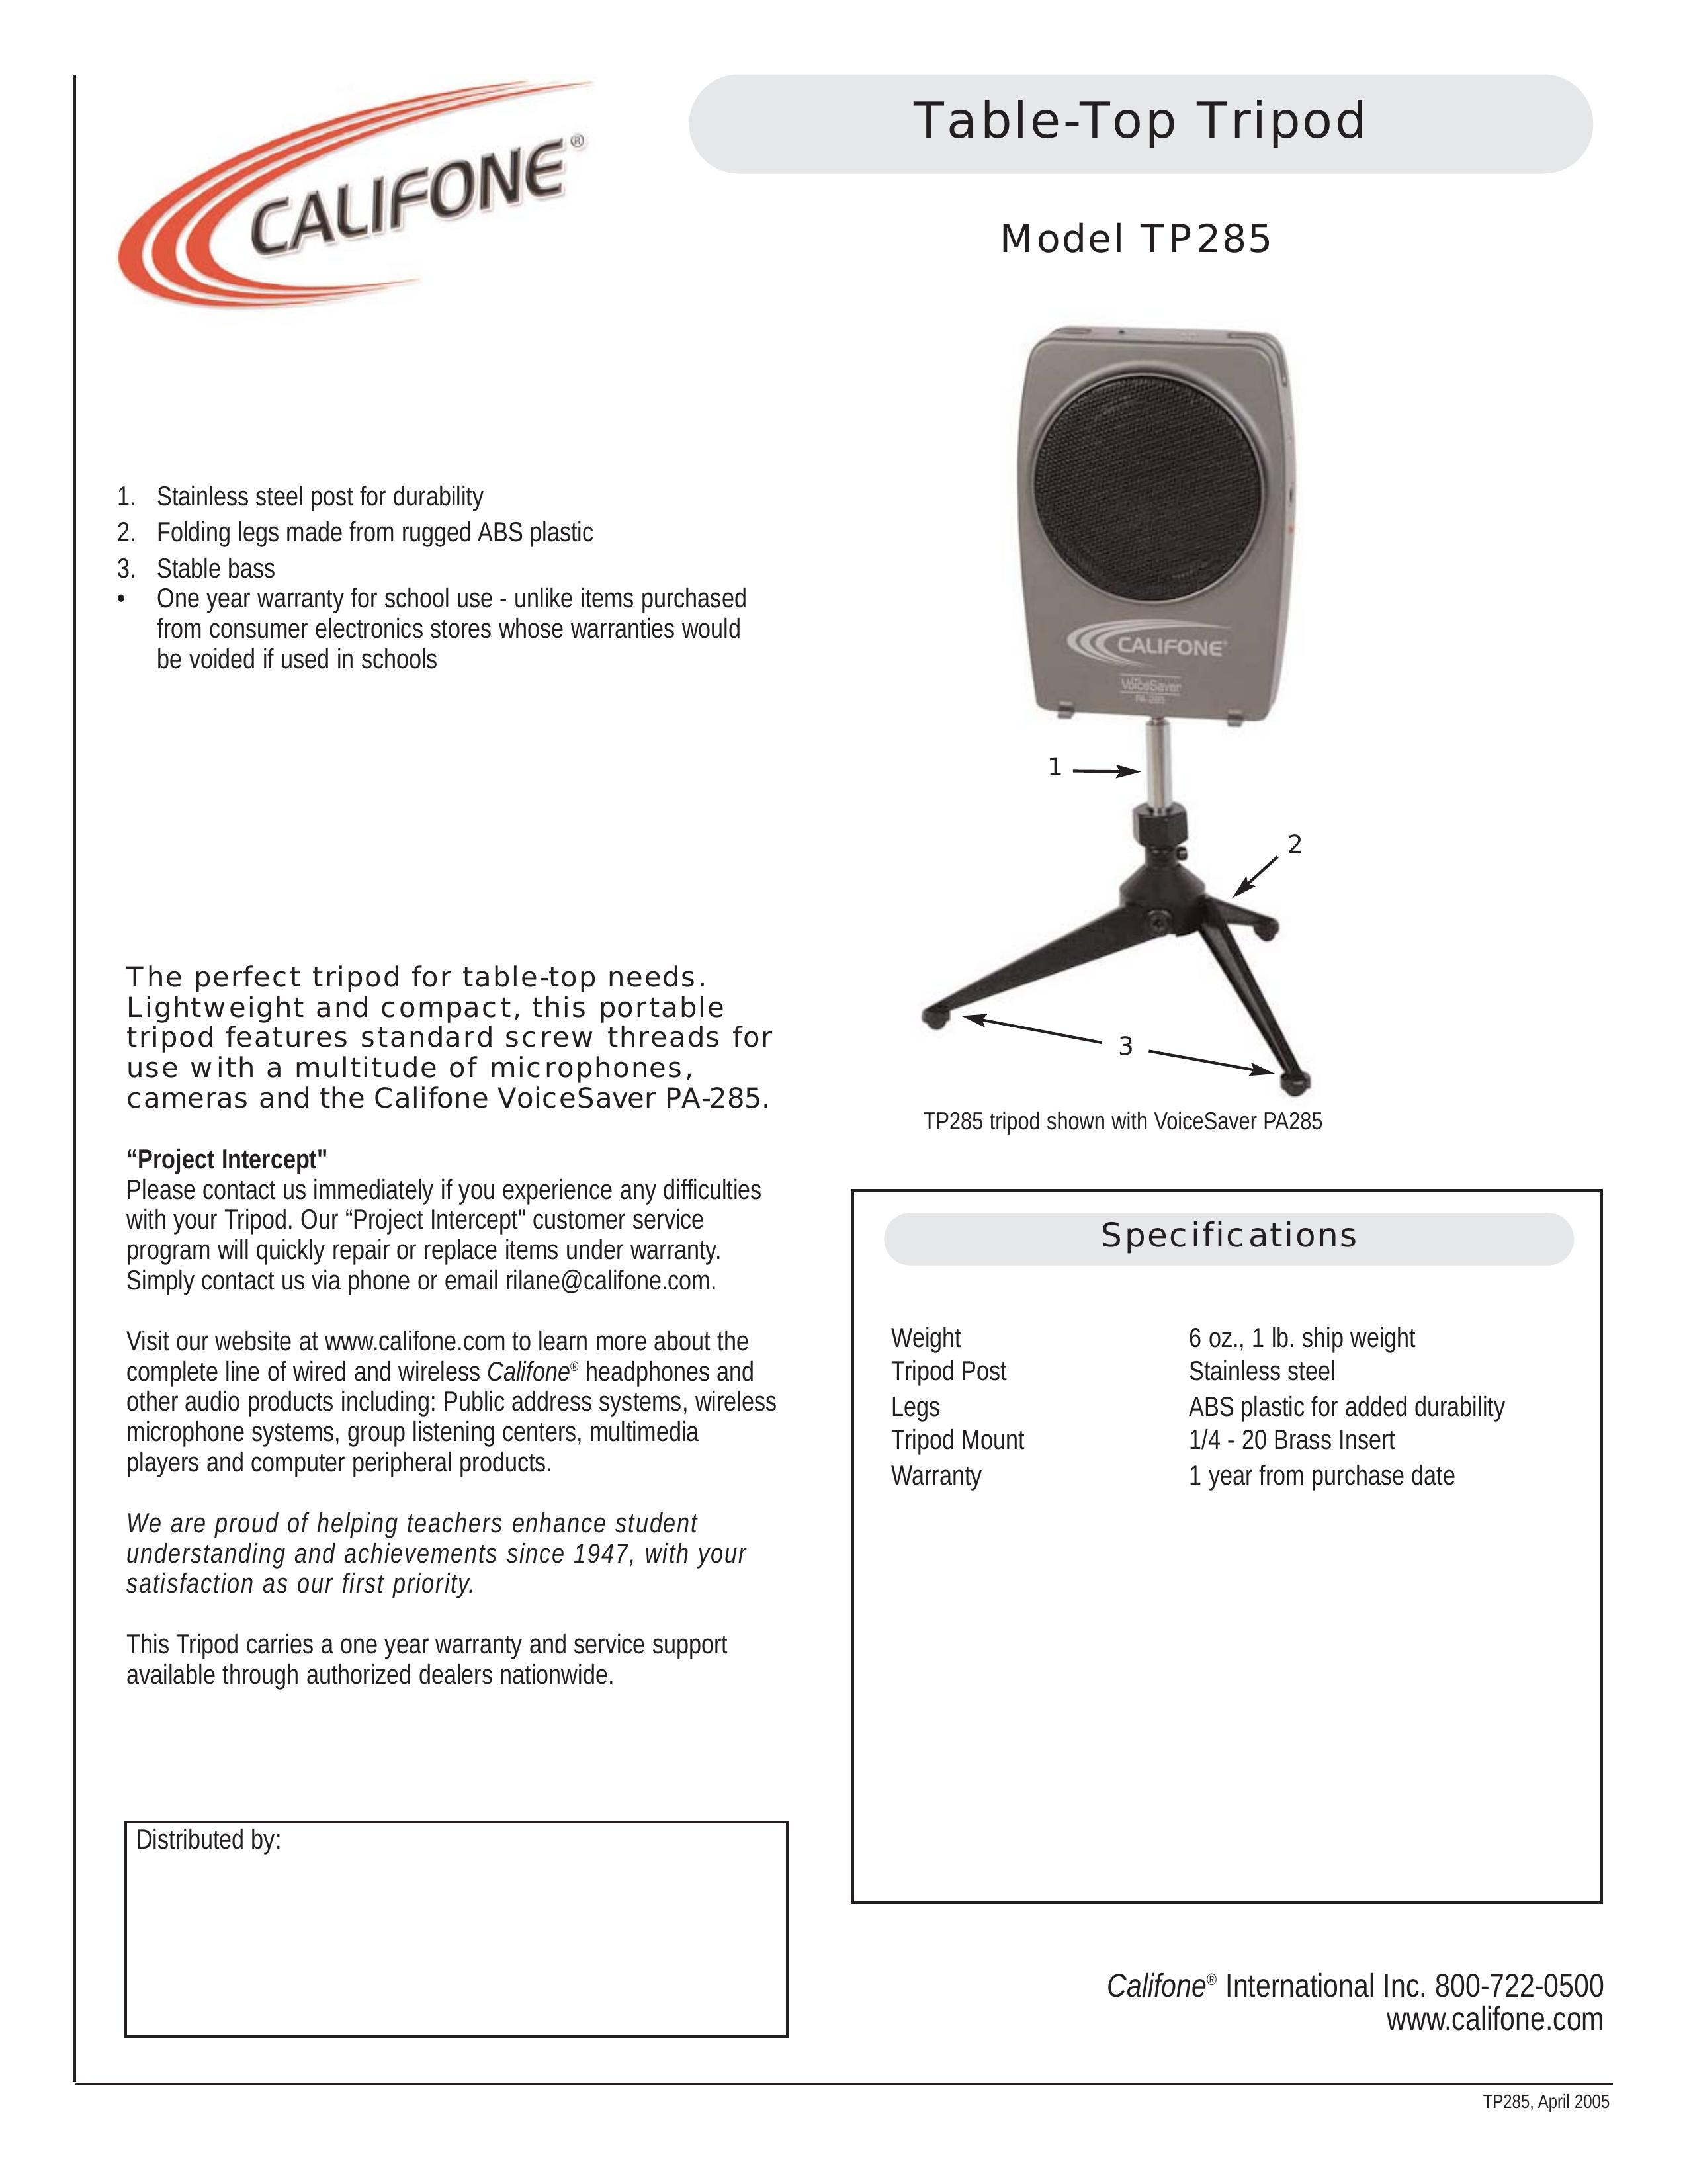 Califone TP285 Camcorder Accessories User Manual